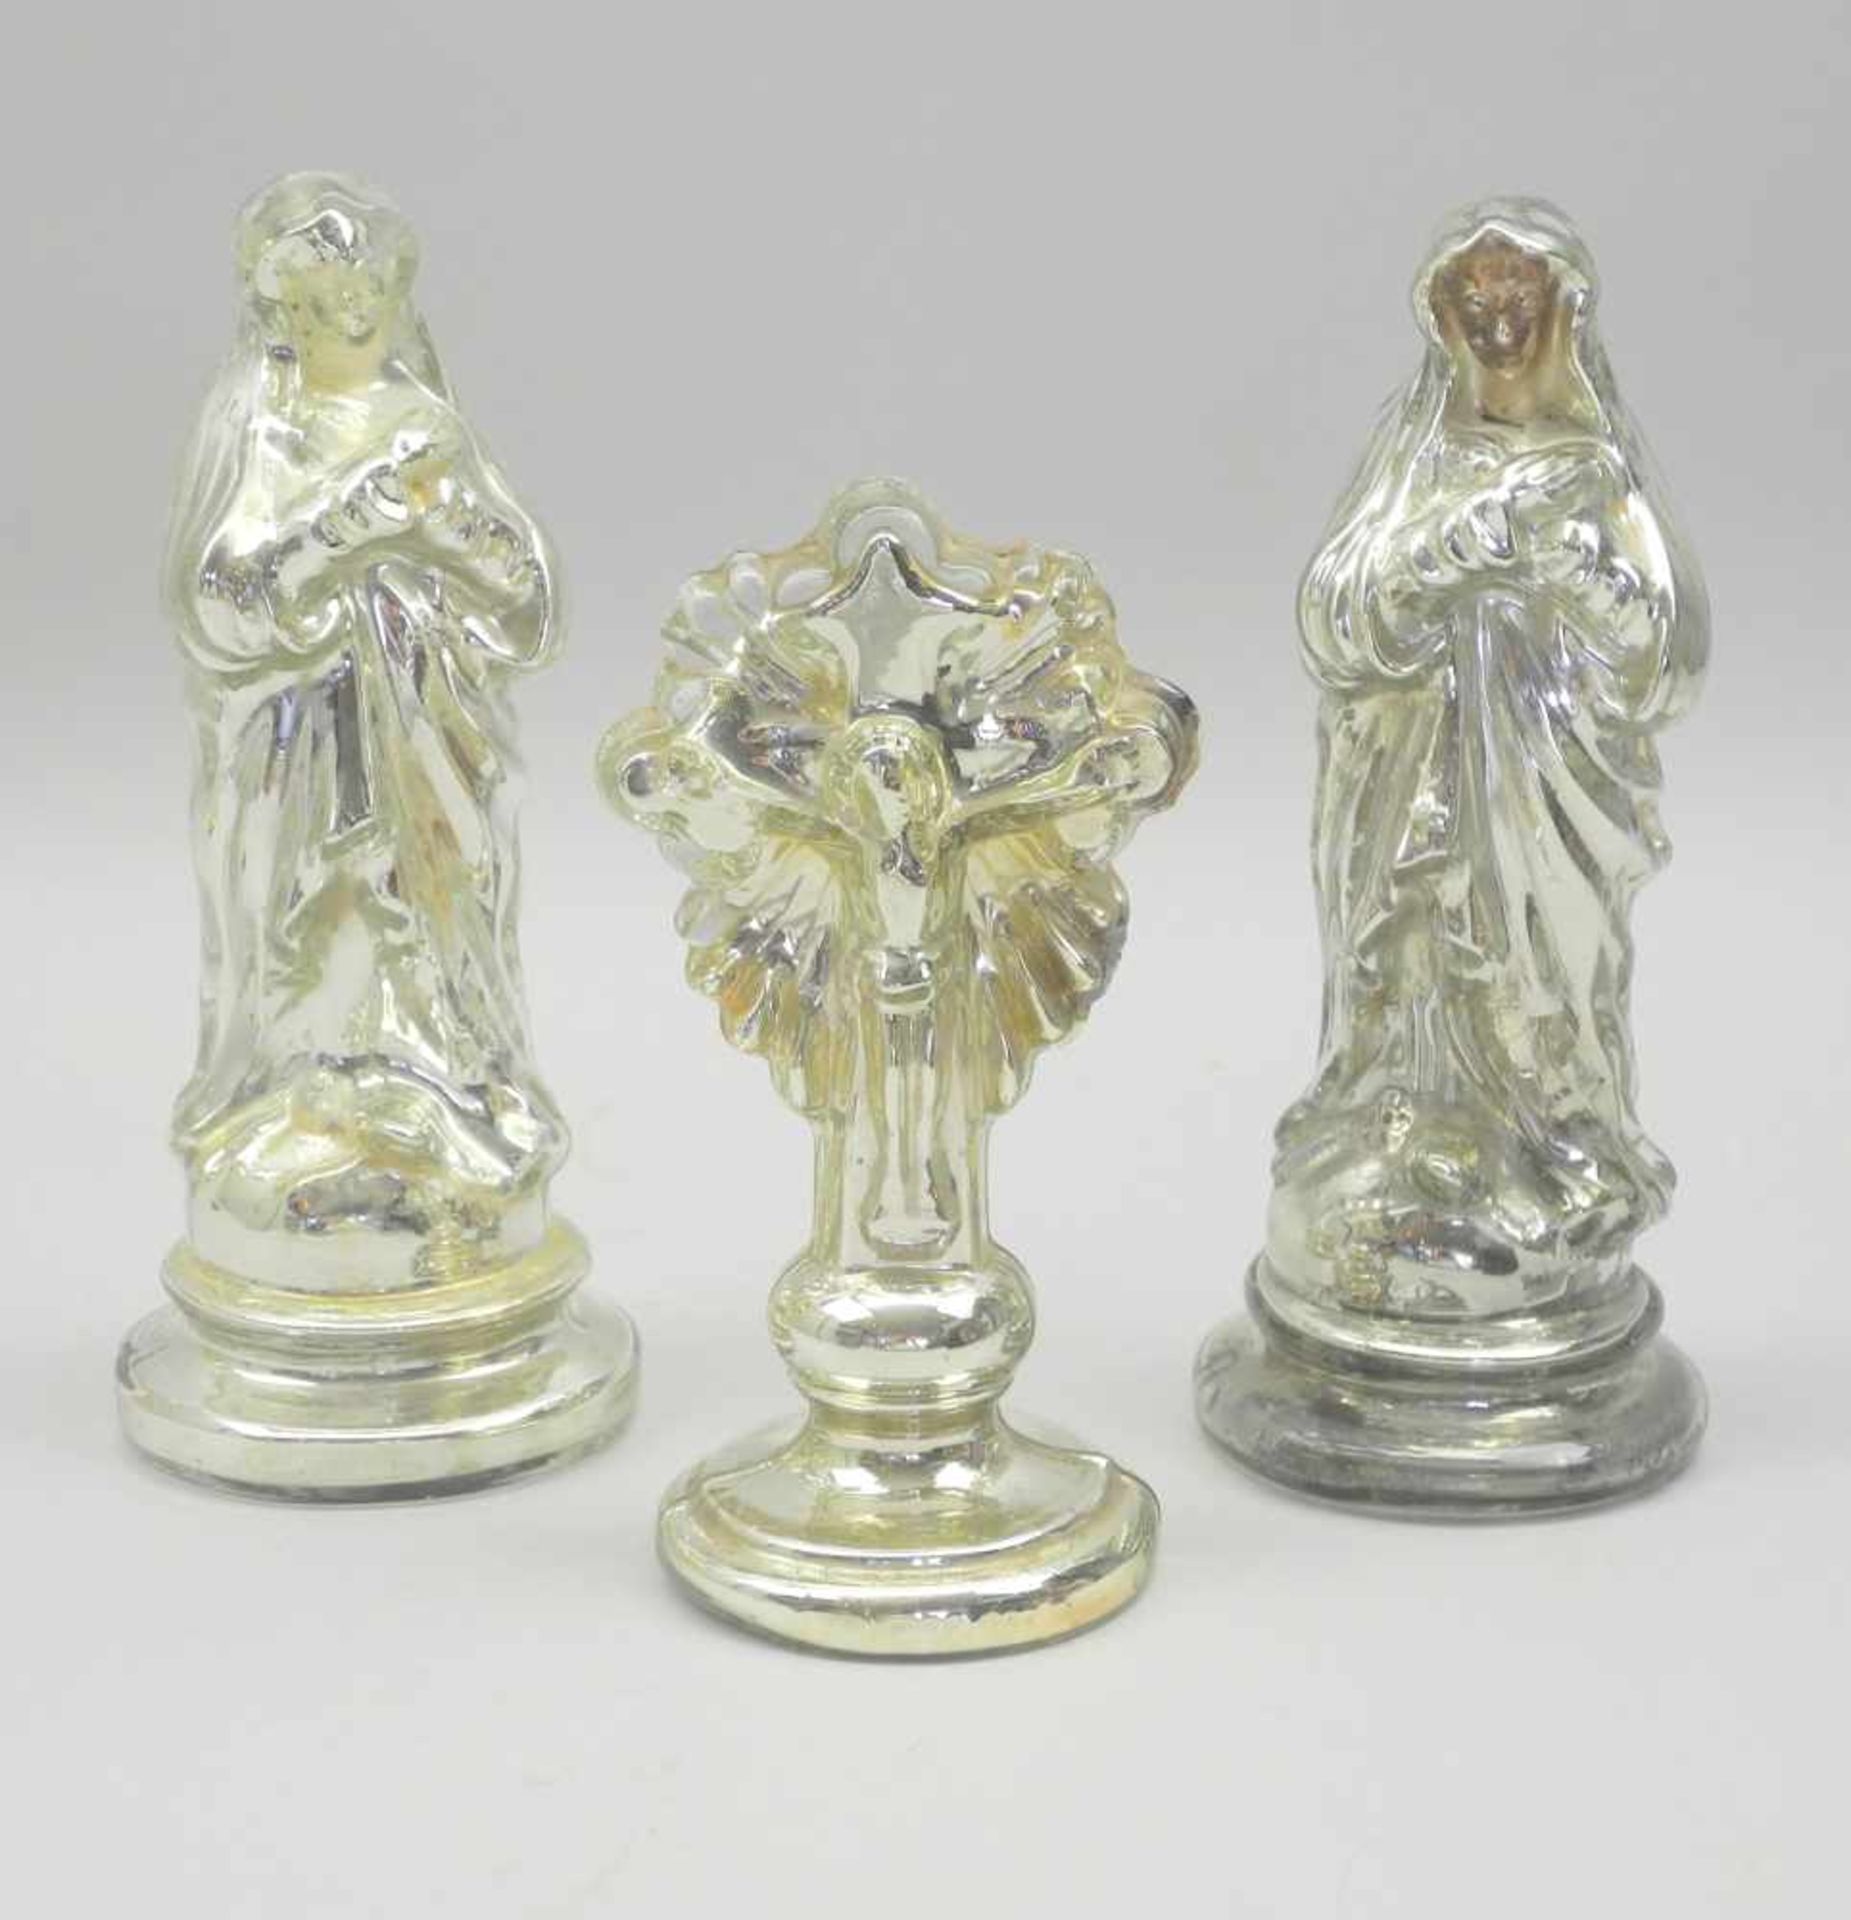 HeiligenfigurenSilberglas. 3 teiliges Konvolut: 2 Madonnen, 1 Christus am Kreuz. Silbr